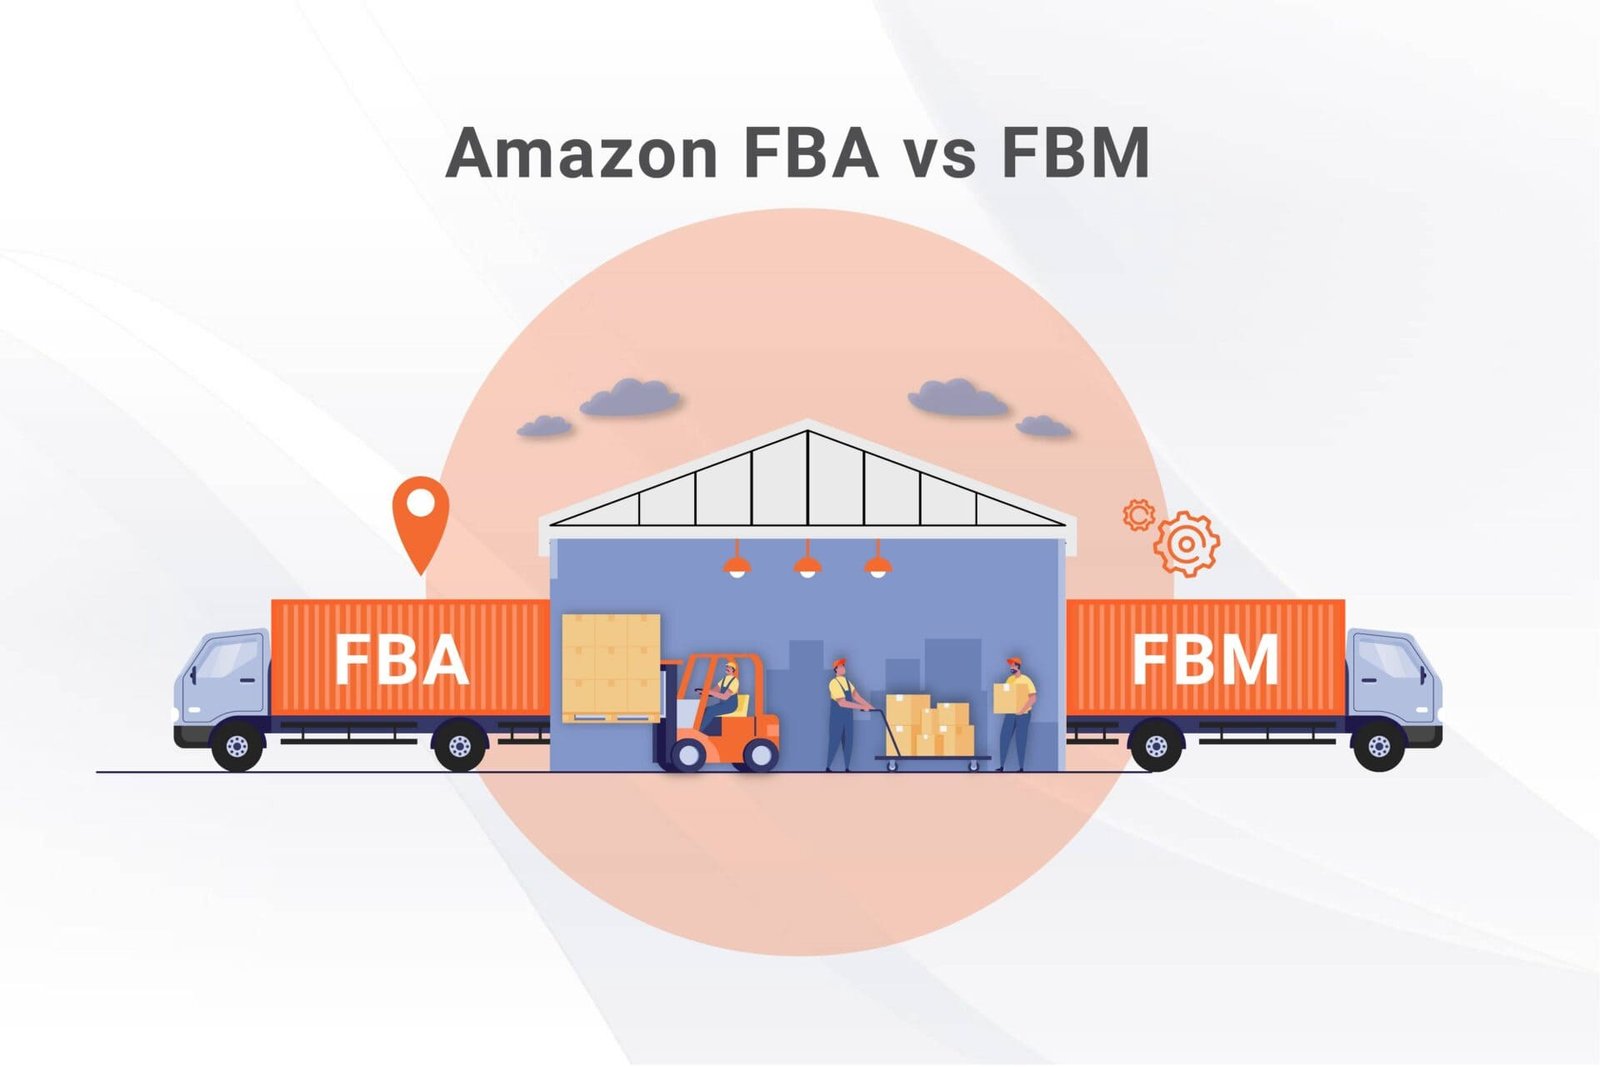 Amazon FBM or FBA
